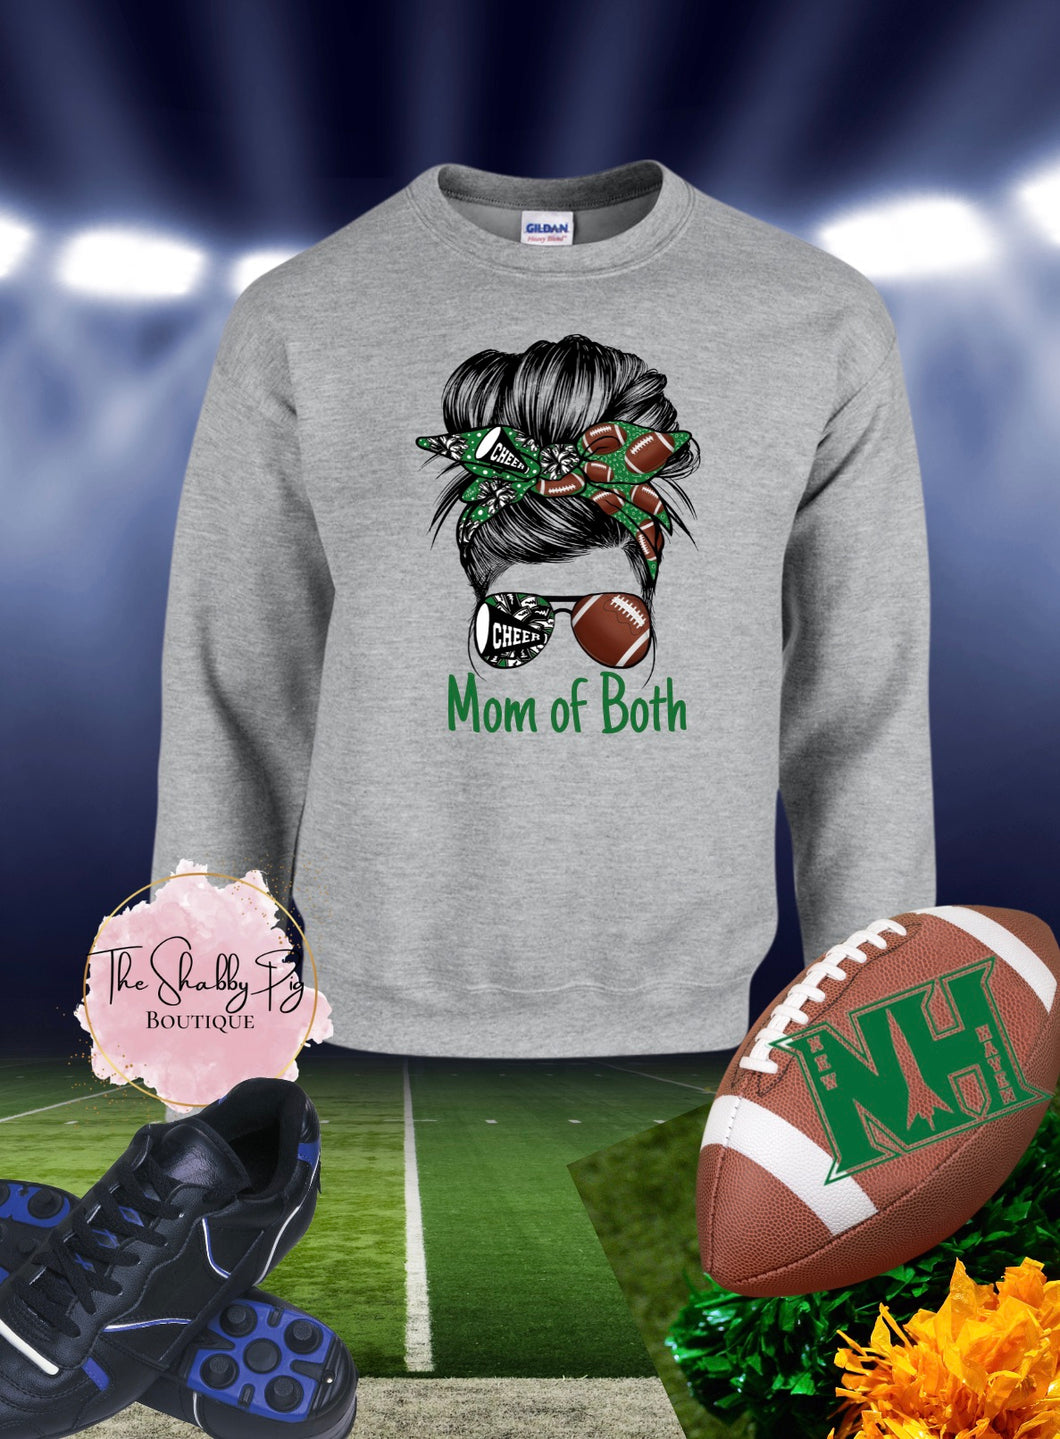 Mom of Both Sweatshirt - Football & Cheer New Haven